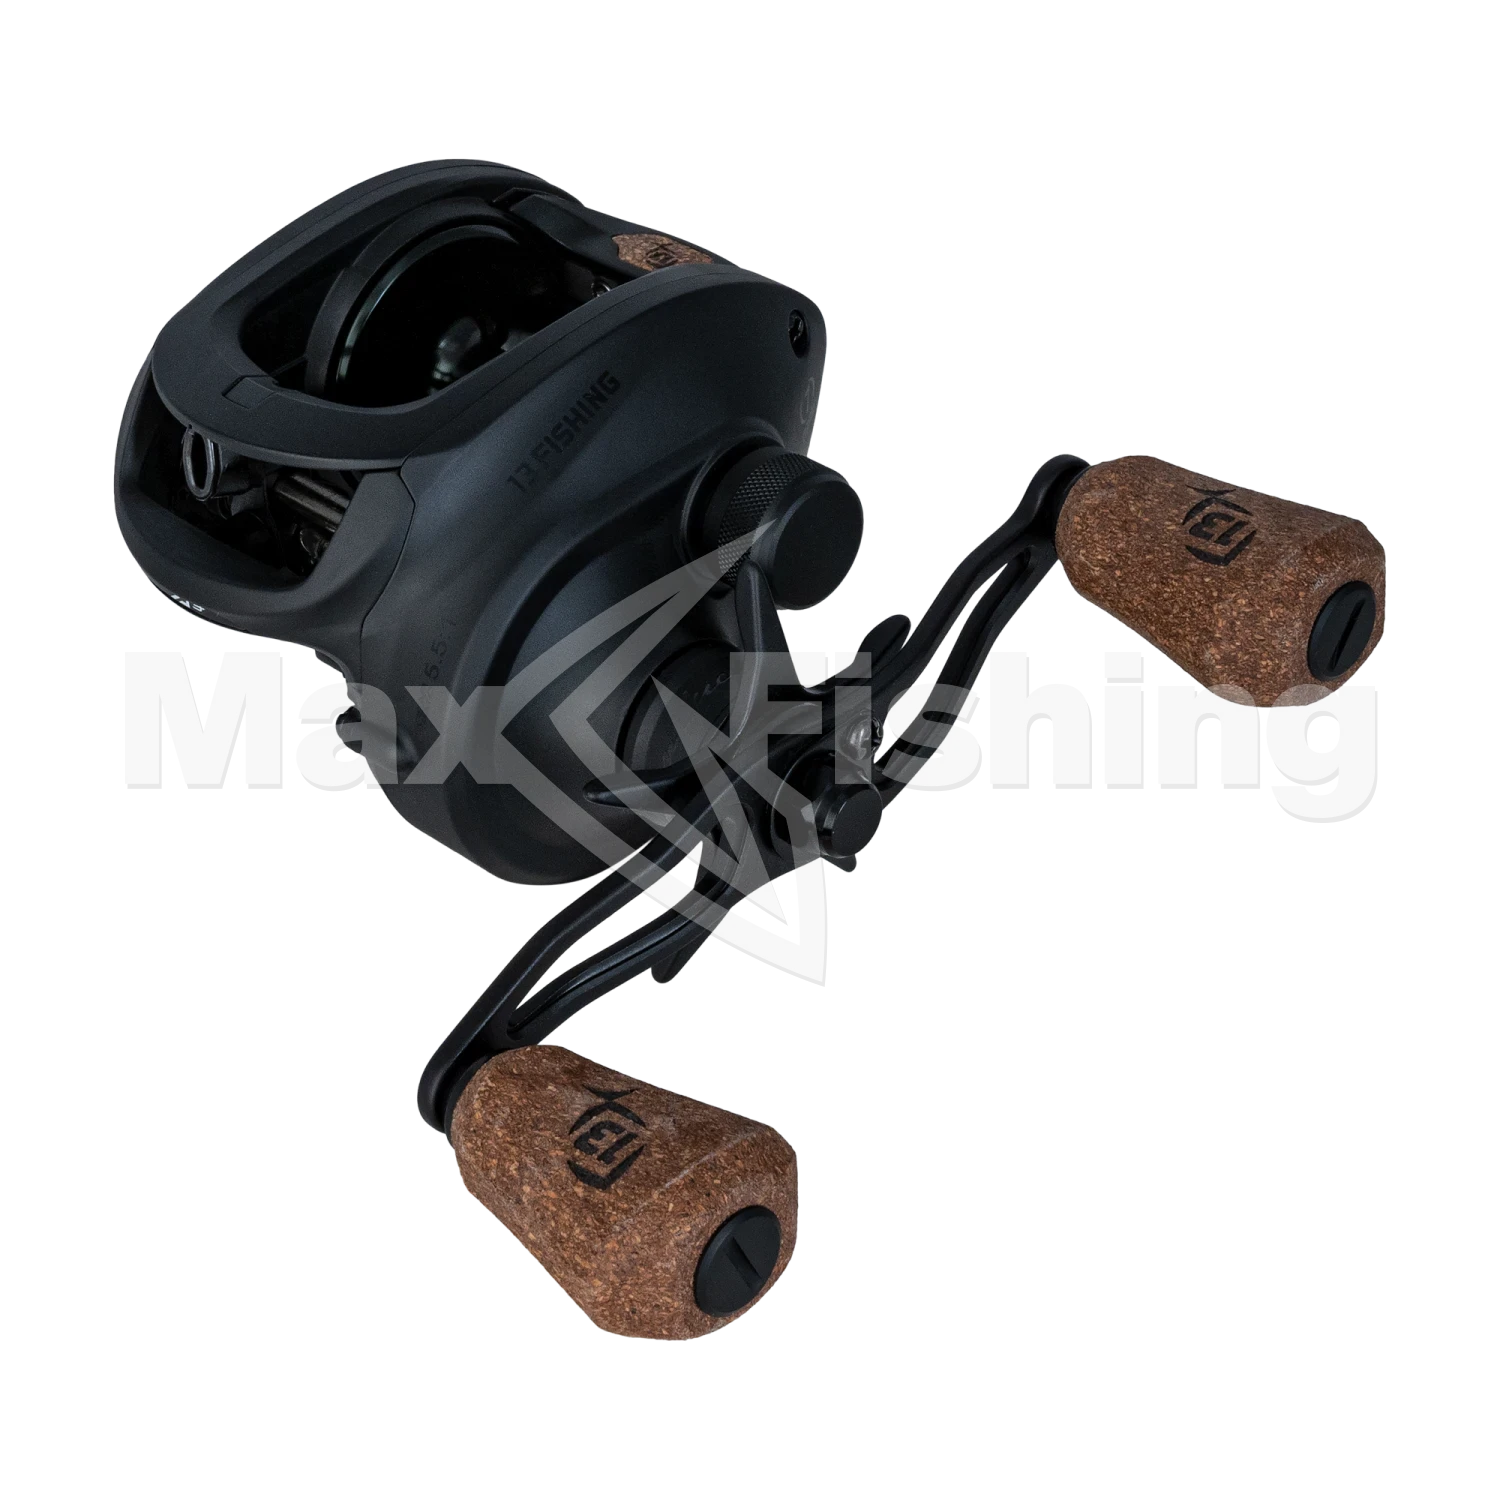 Катушка мультипликаторная 13 Fishing Concept A3 Casting Reel 8.1-LH